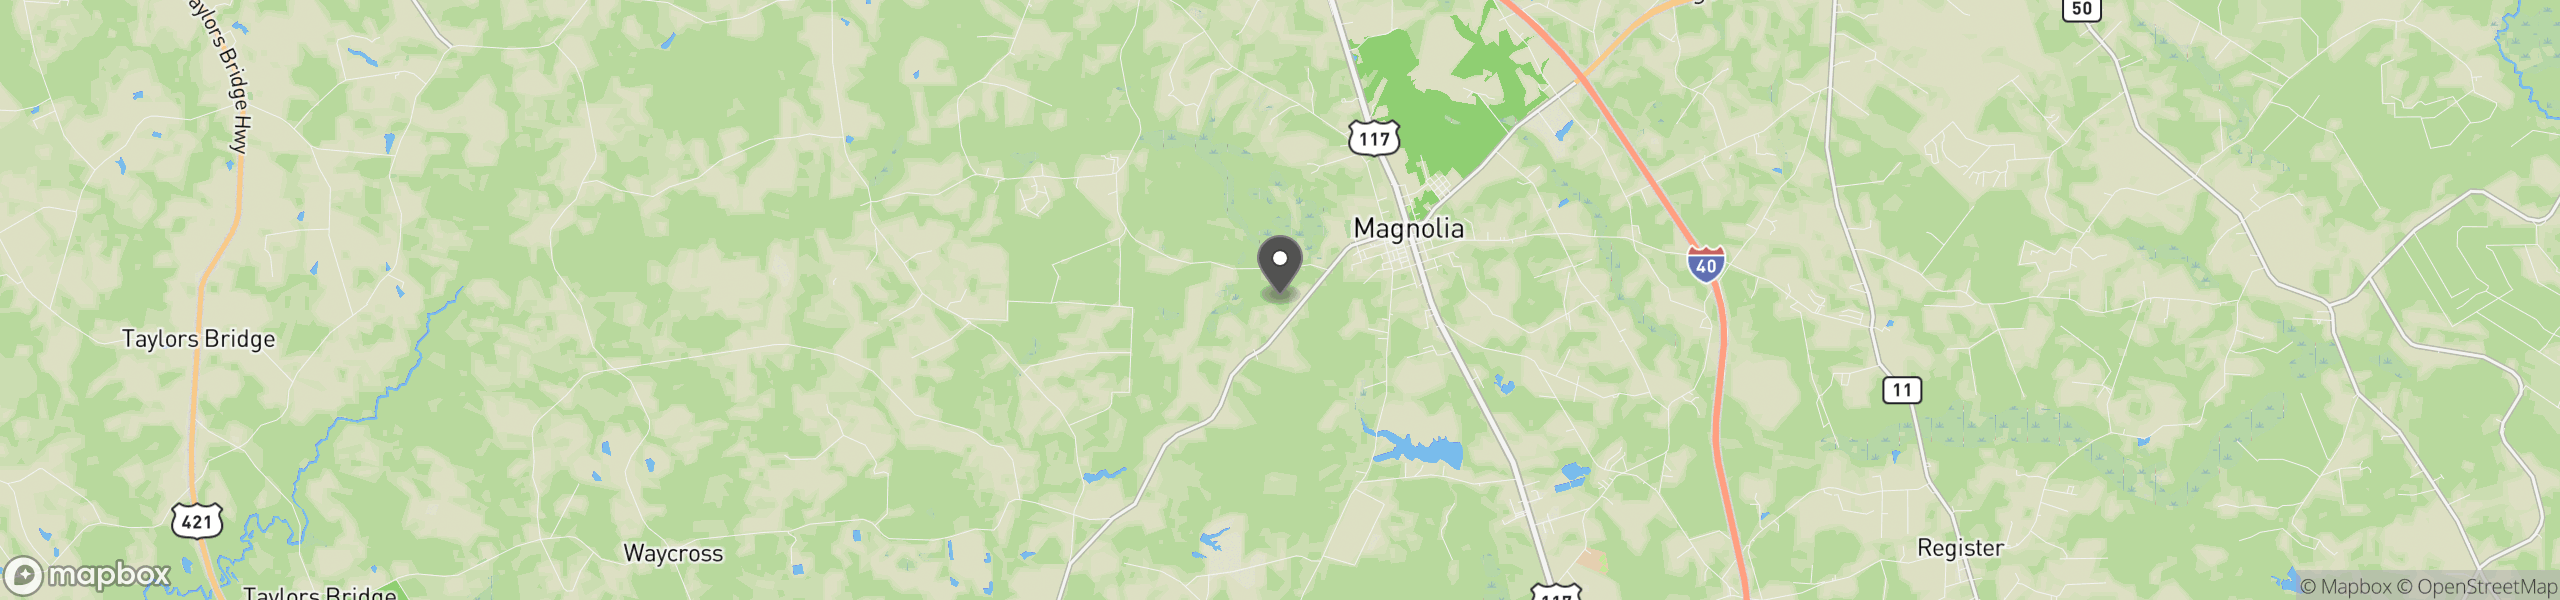 Magnolia, NC